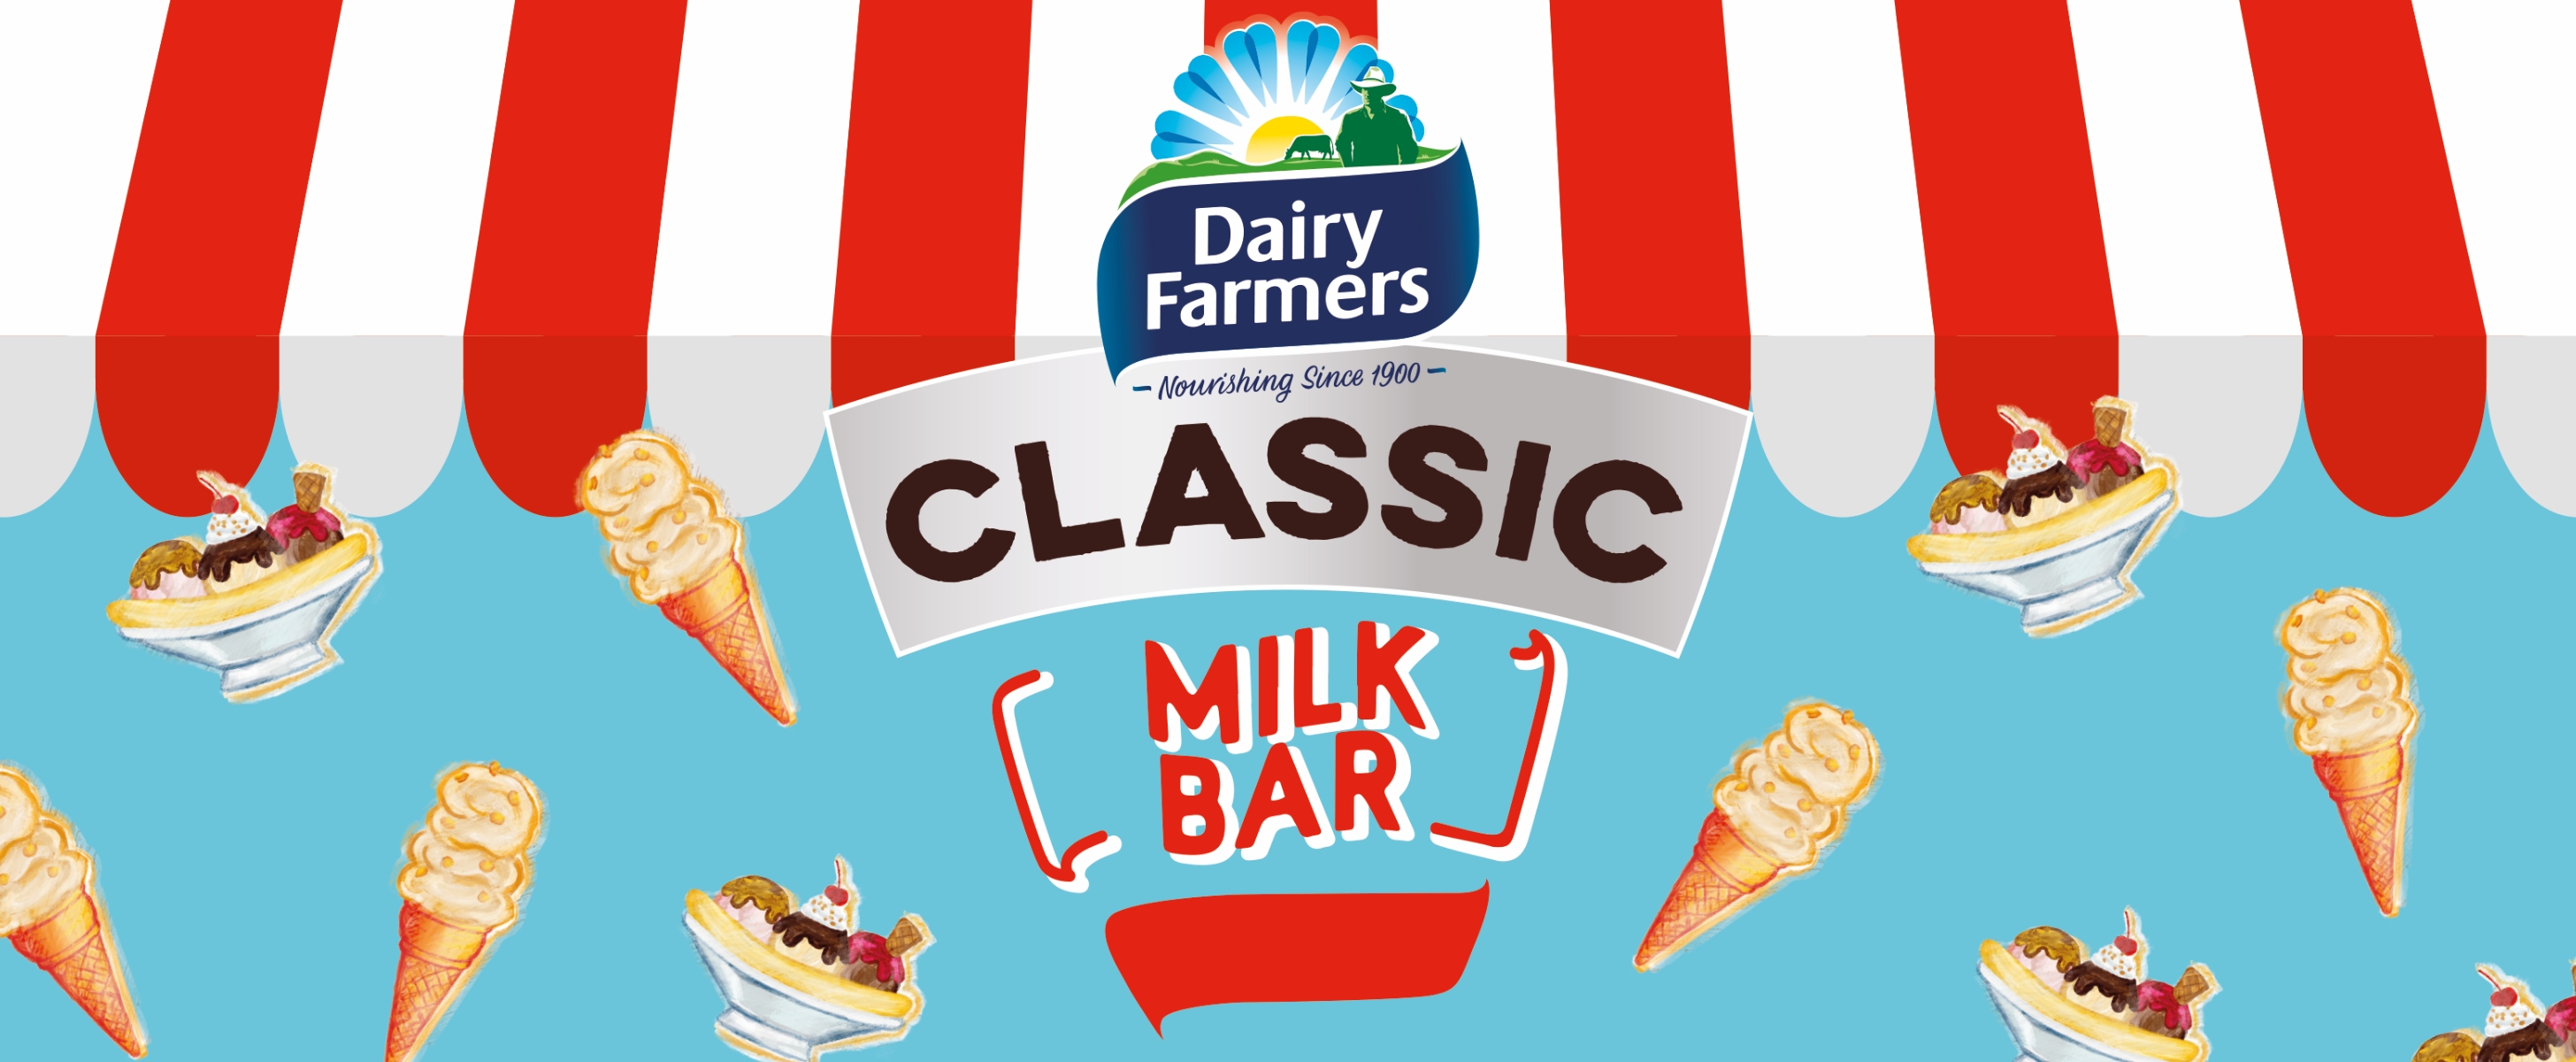 Dairy farmers classic milk bar illustrations